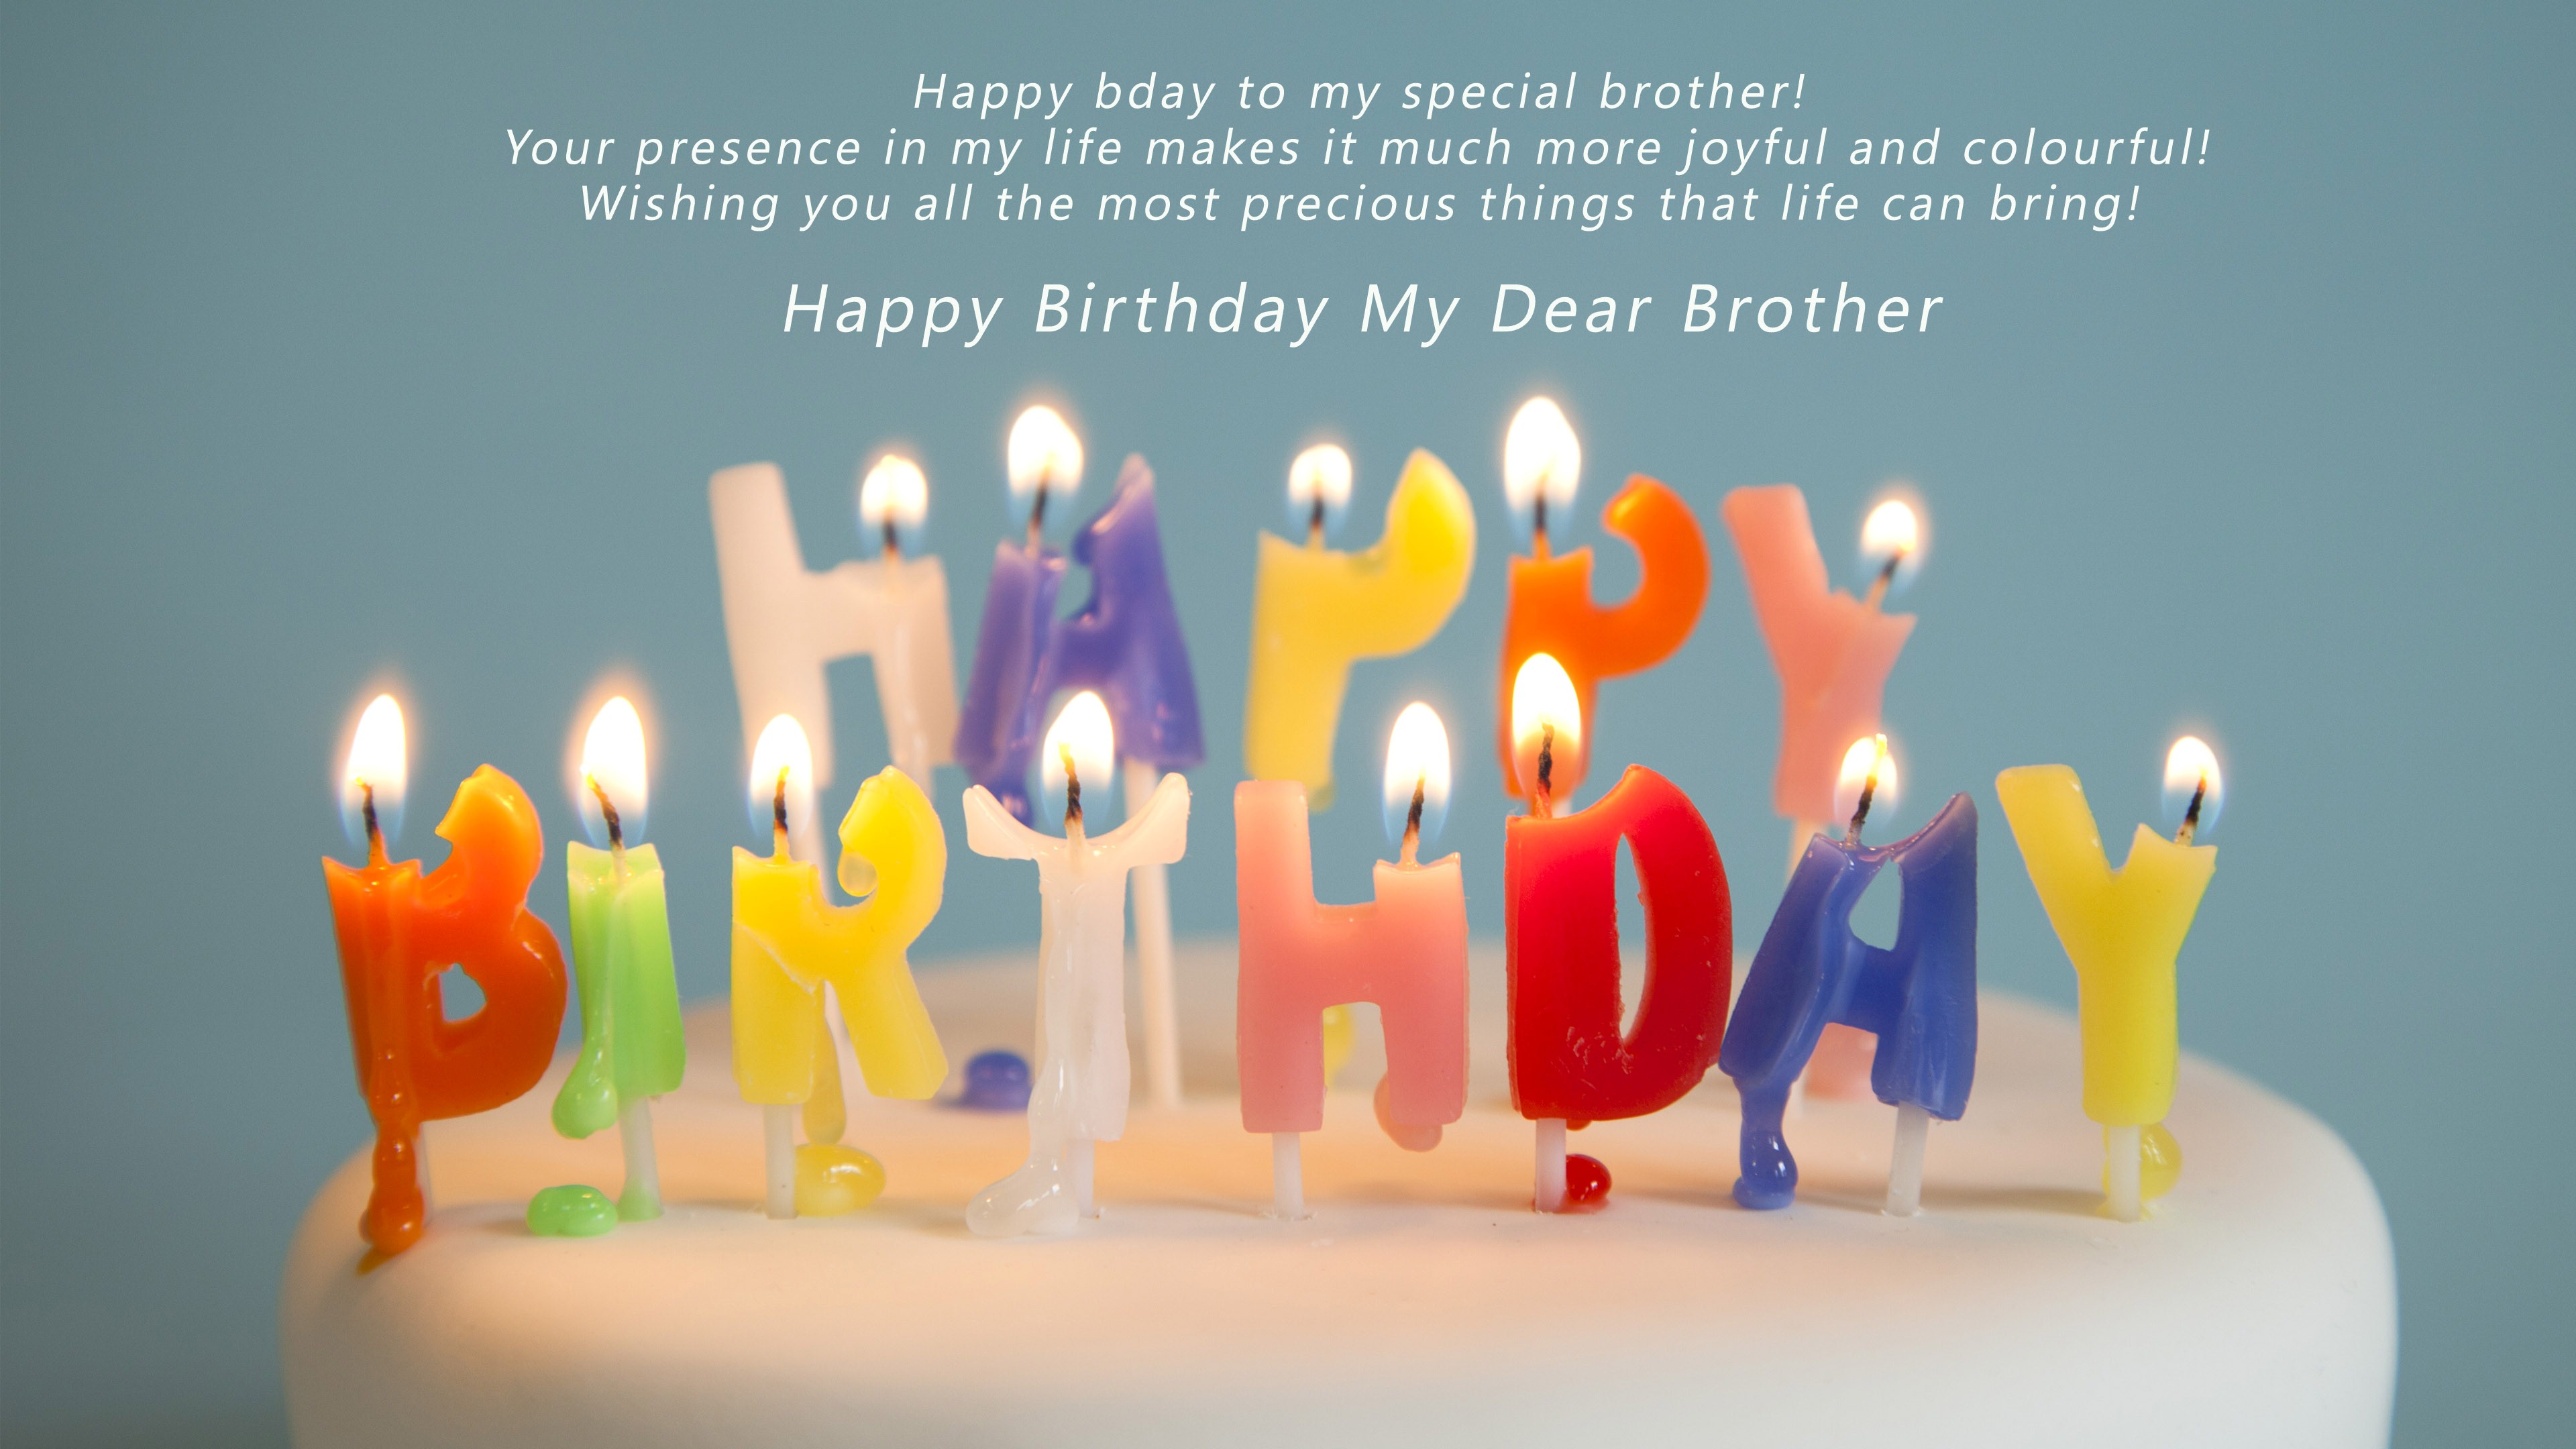 Wish You Happy Birthday My Dear Brother Happy Birthday In German Song 3840x2160 Wallpaper Teahub Io